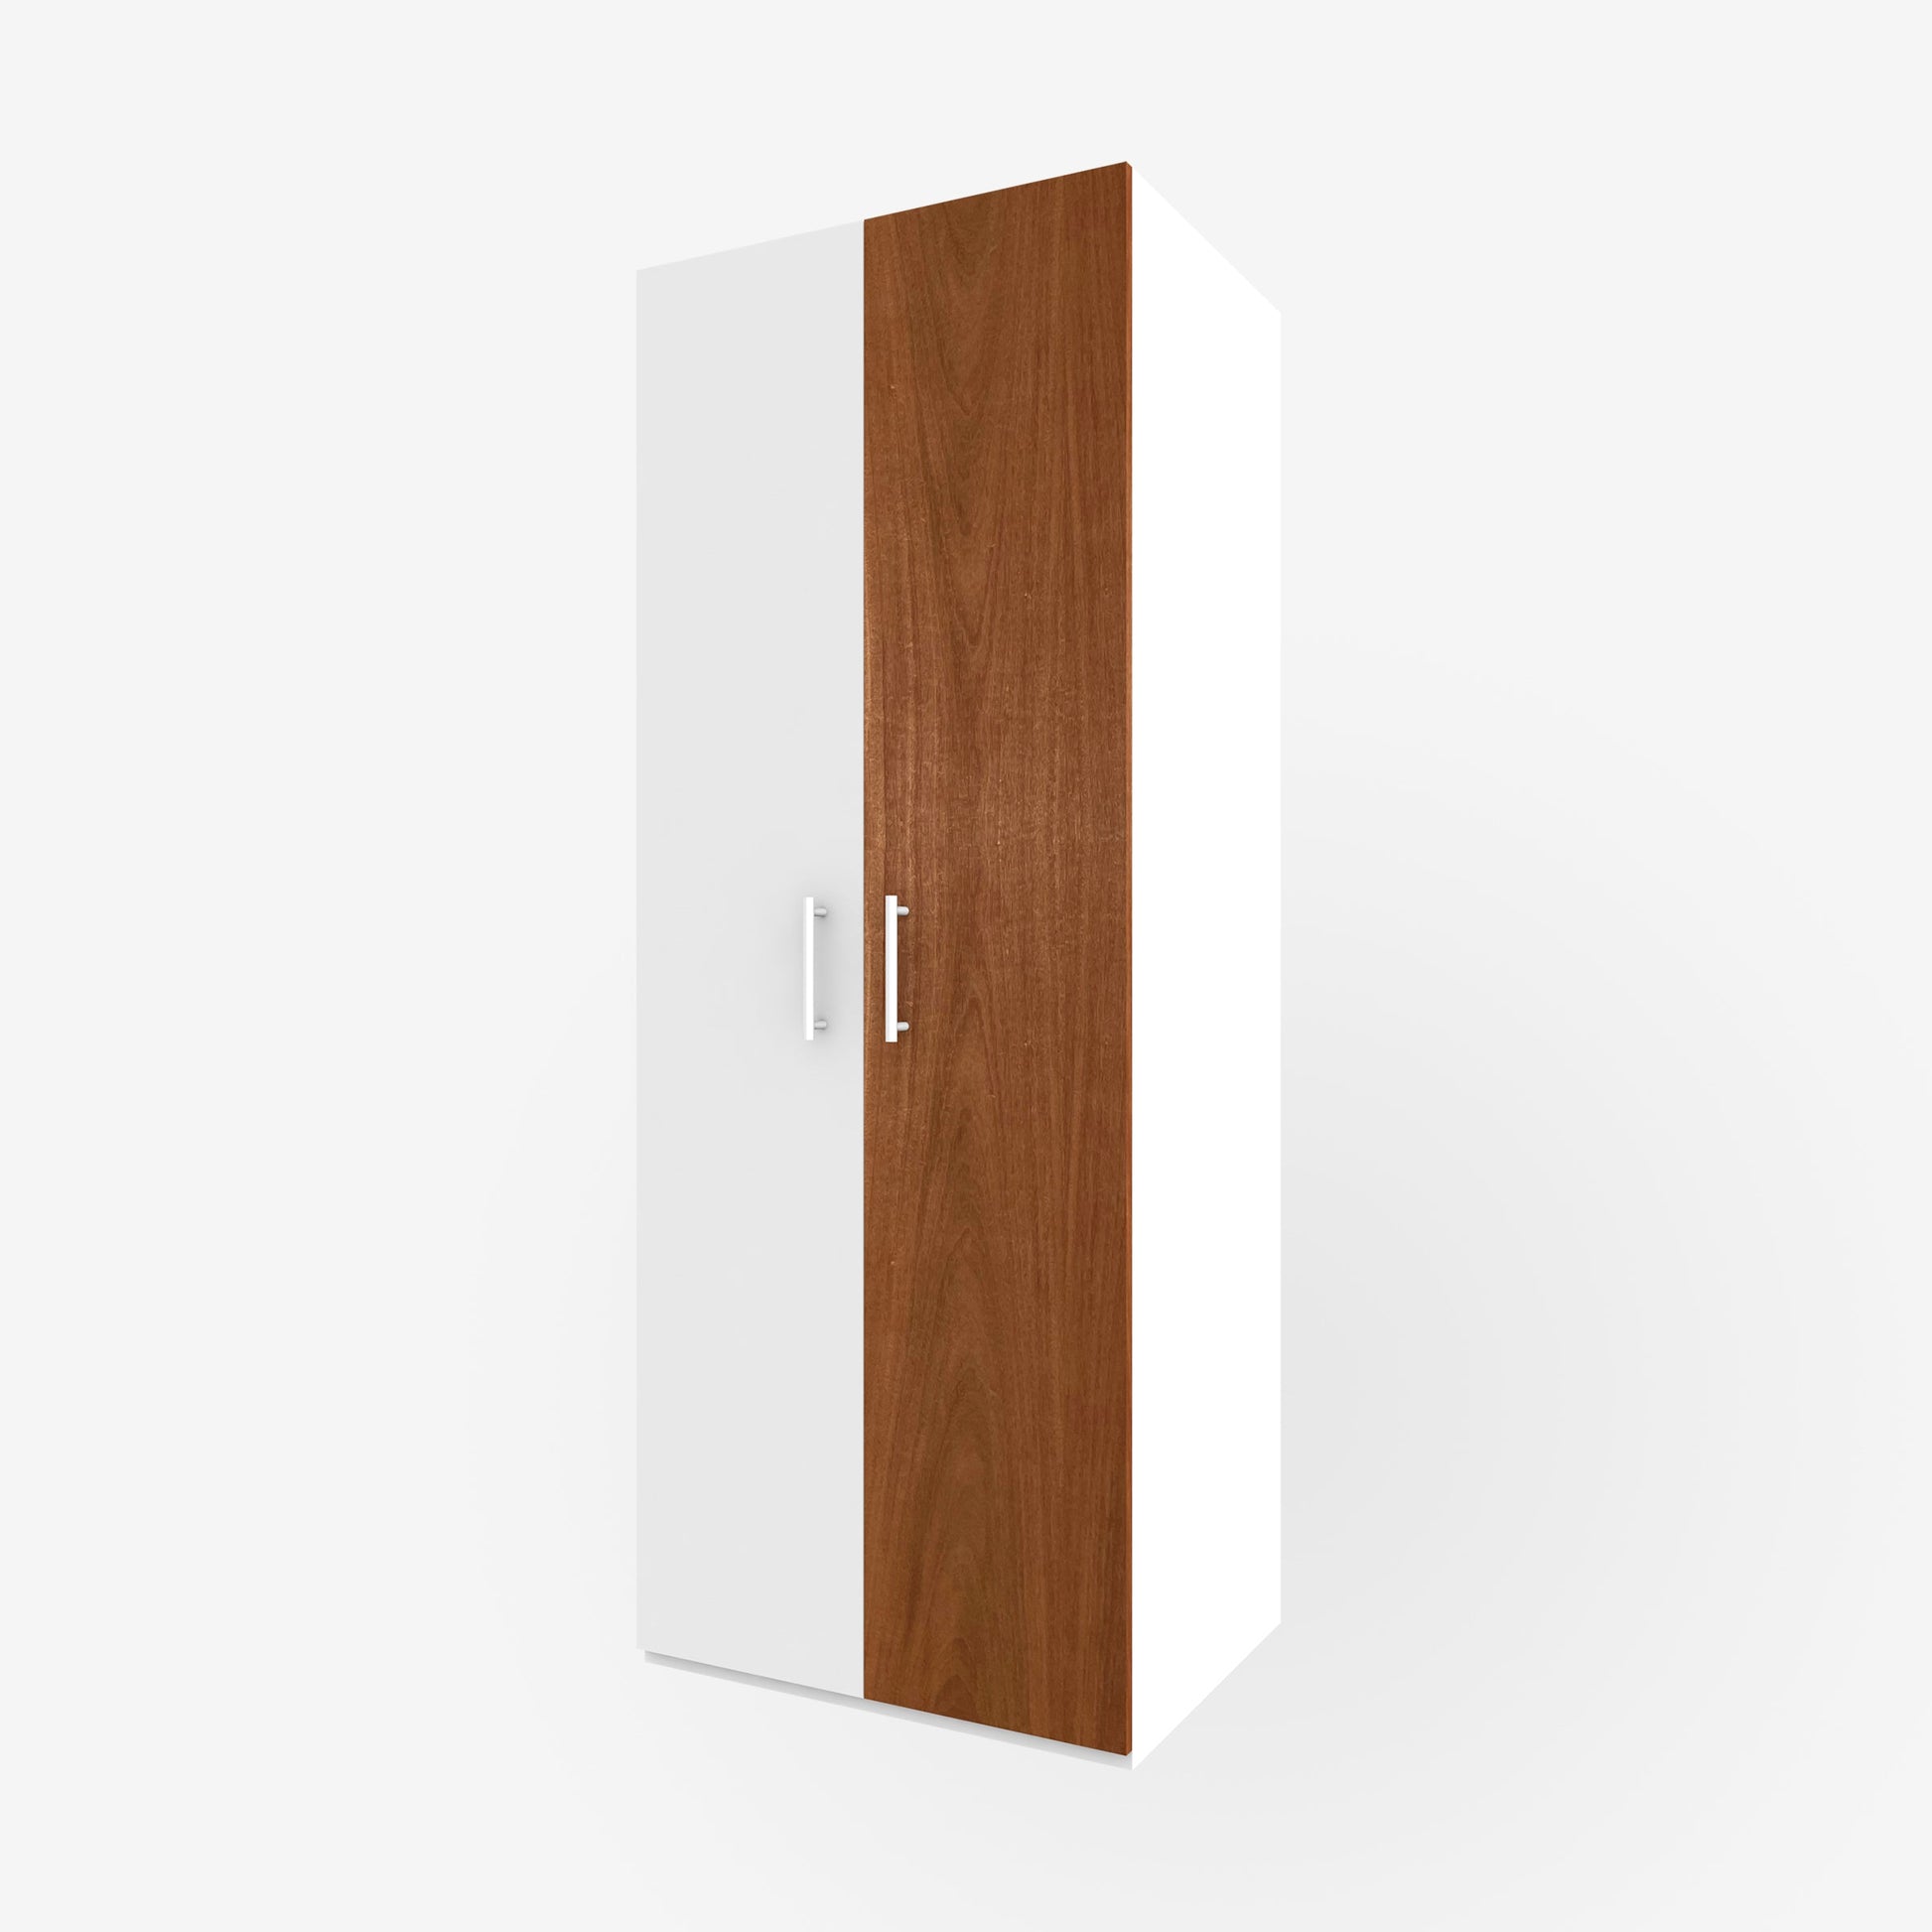 15" x 79" real wood veneer mahogany slab door for Ikea or Swedeboxx pax closet cabinet